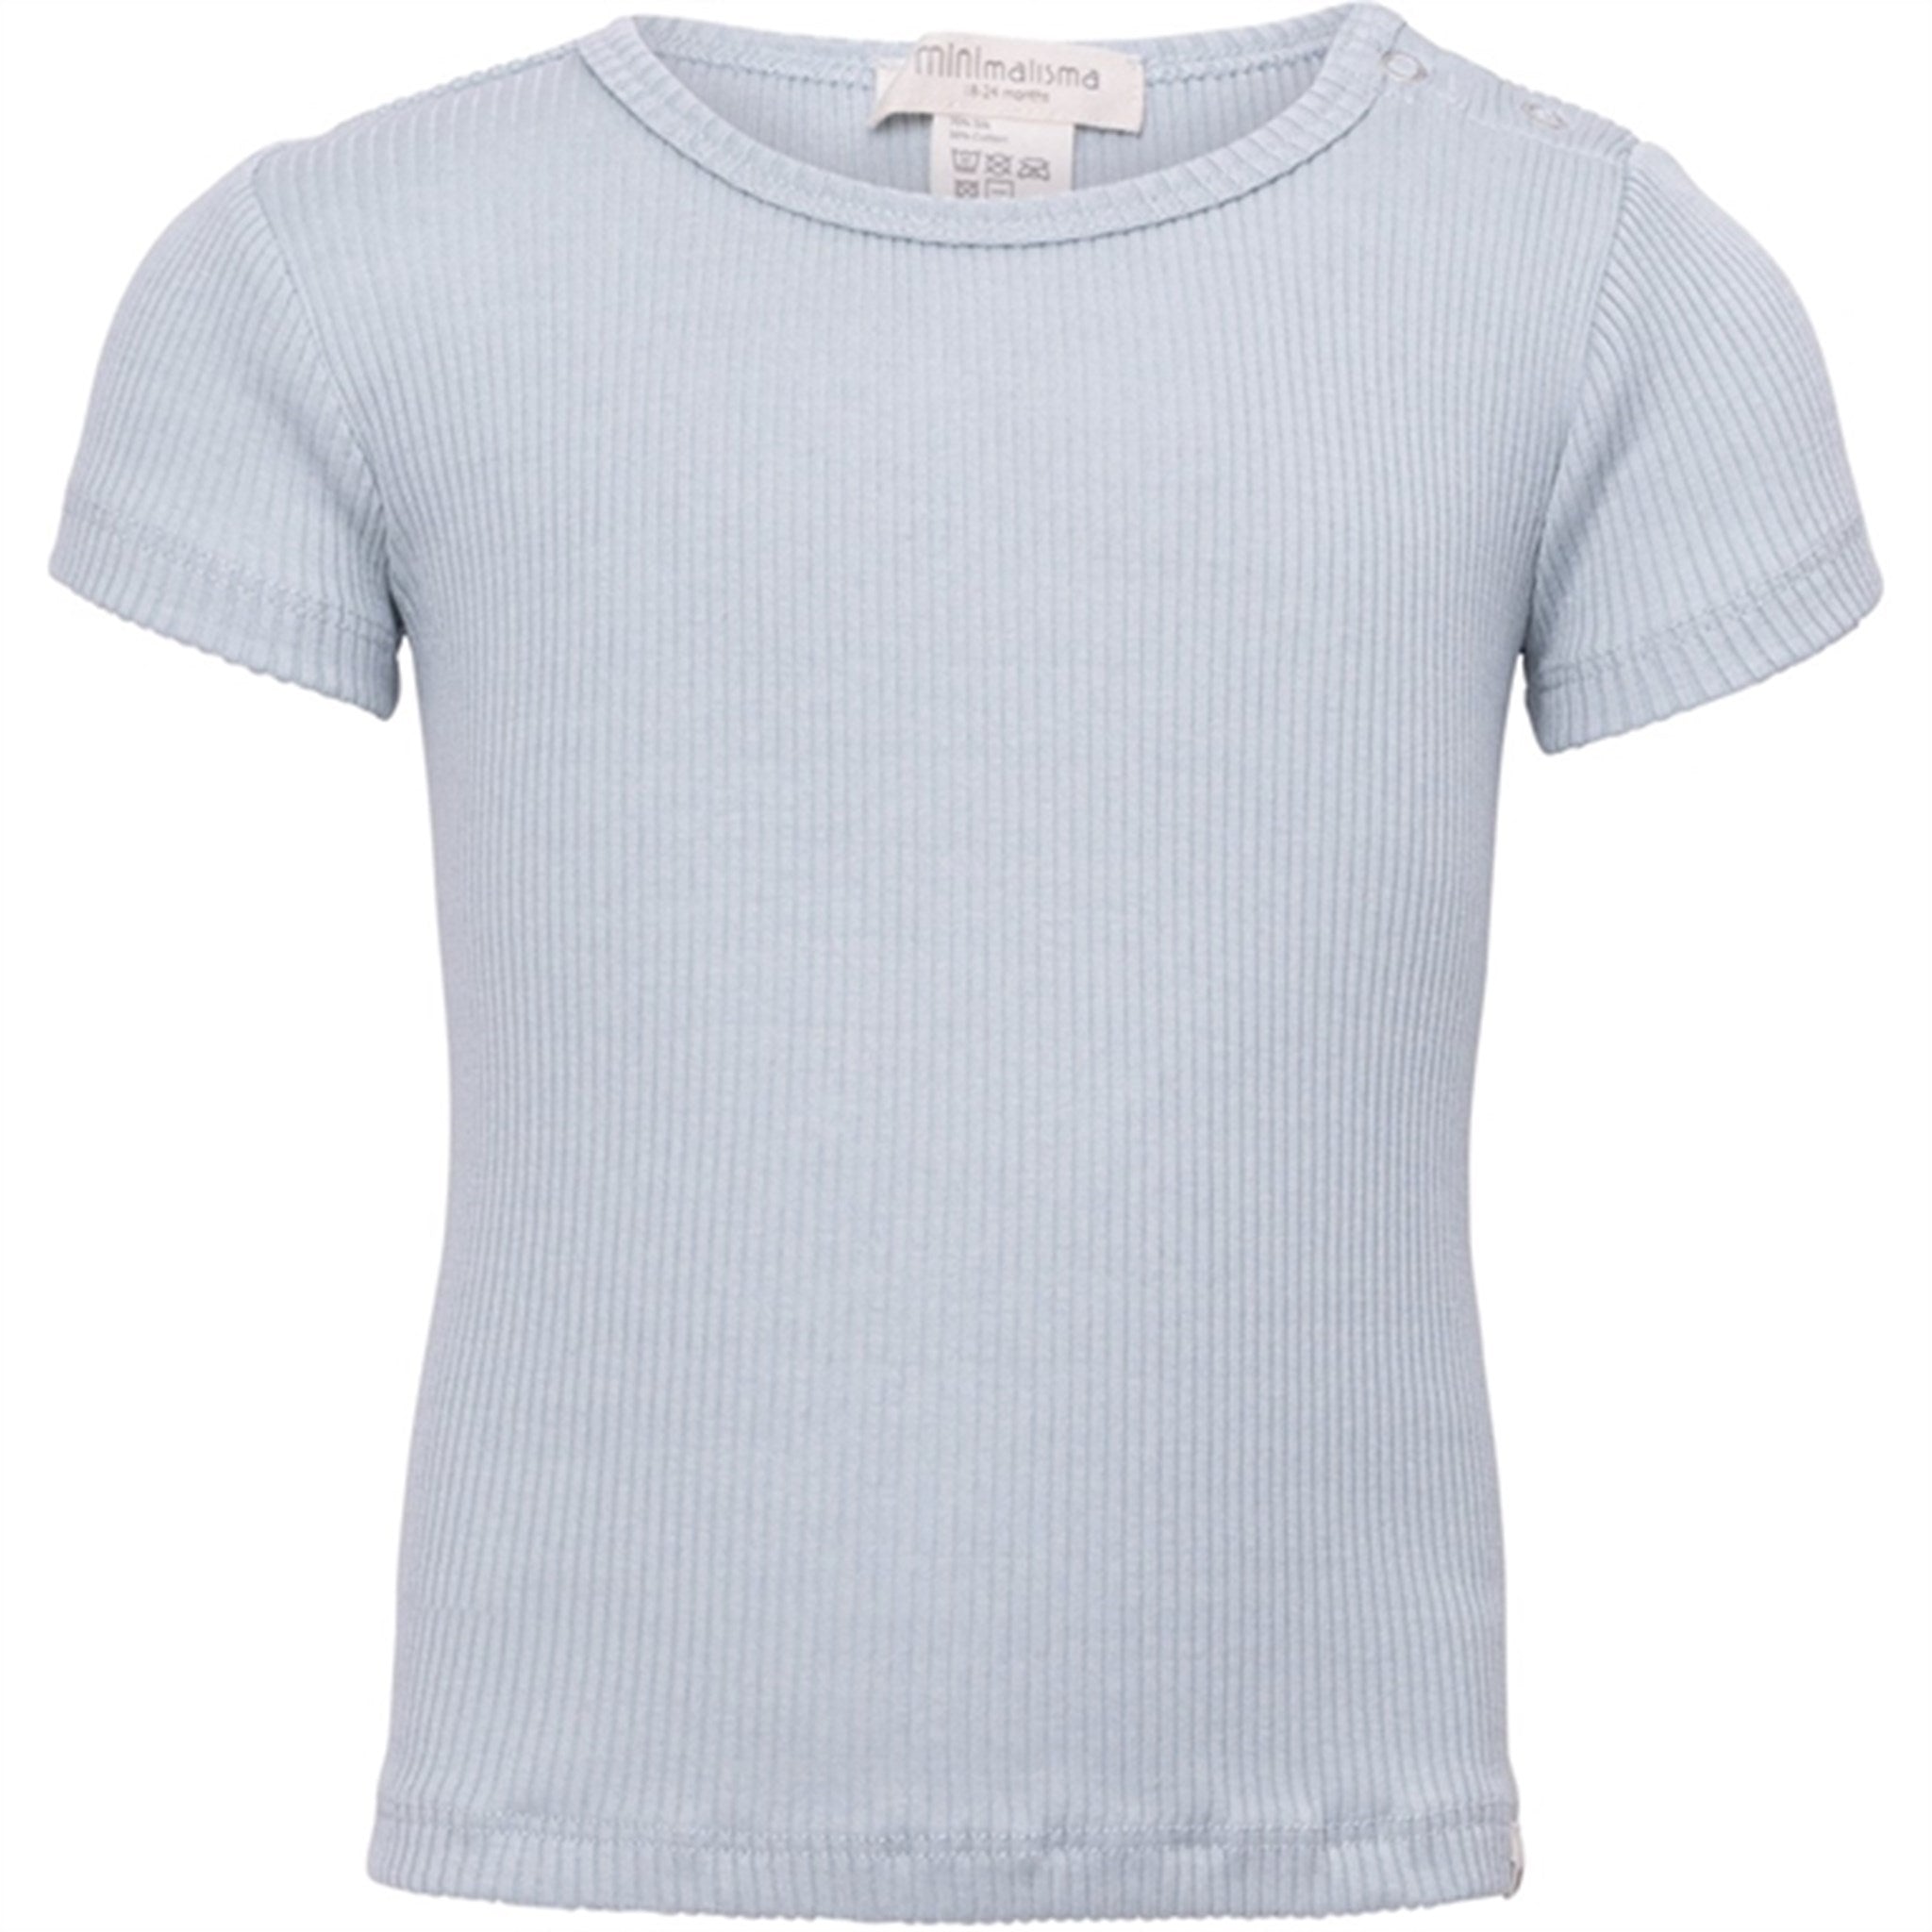 Minimalisma Bimse T-shirt Light Blue